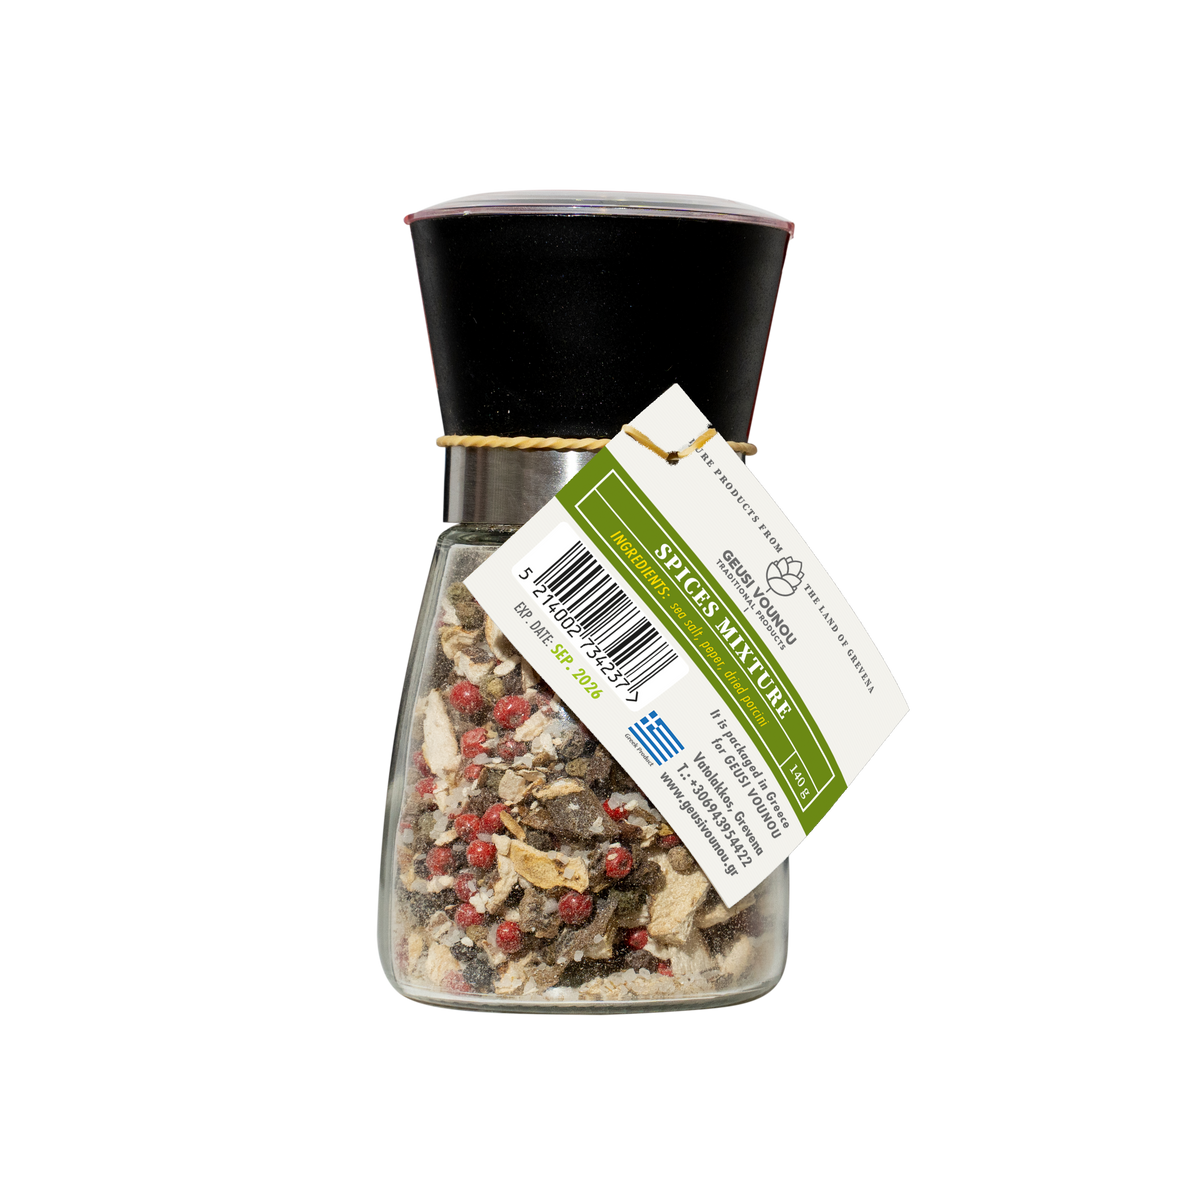 Spice Mixture Grinder from Greece, 140g - (by Geusi Vounou)